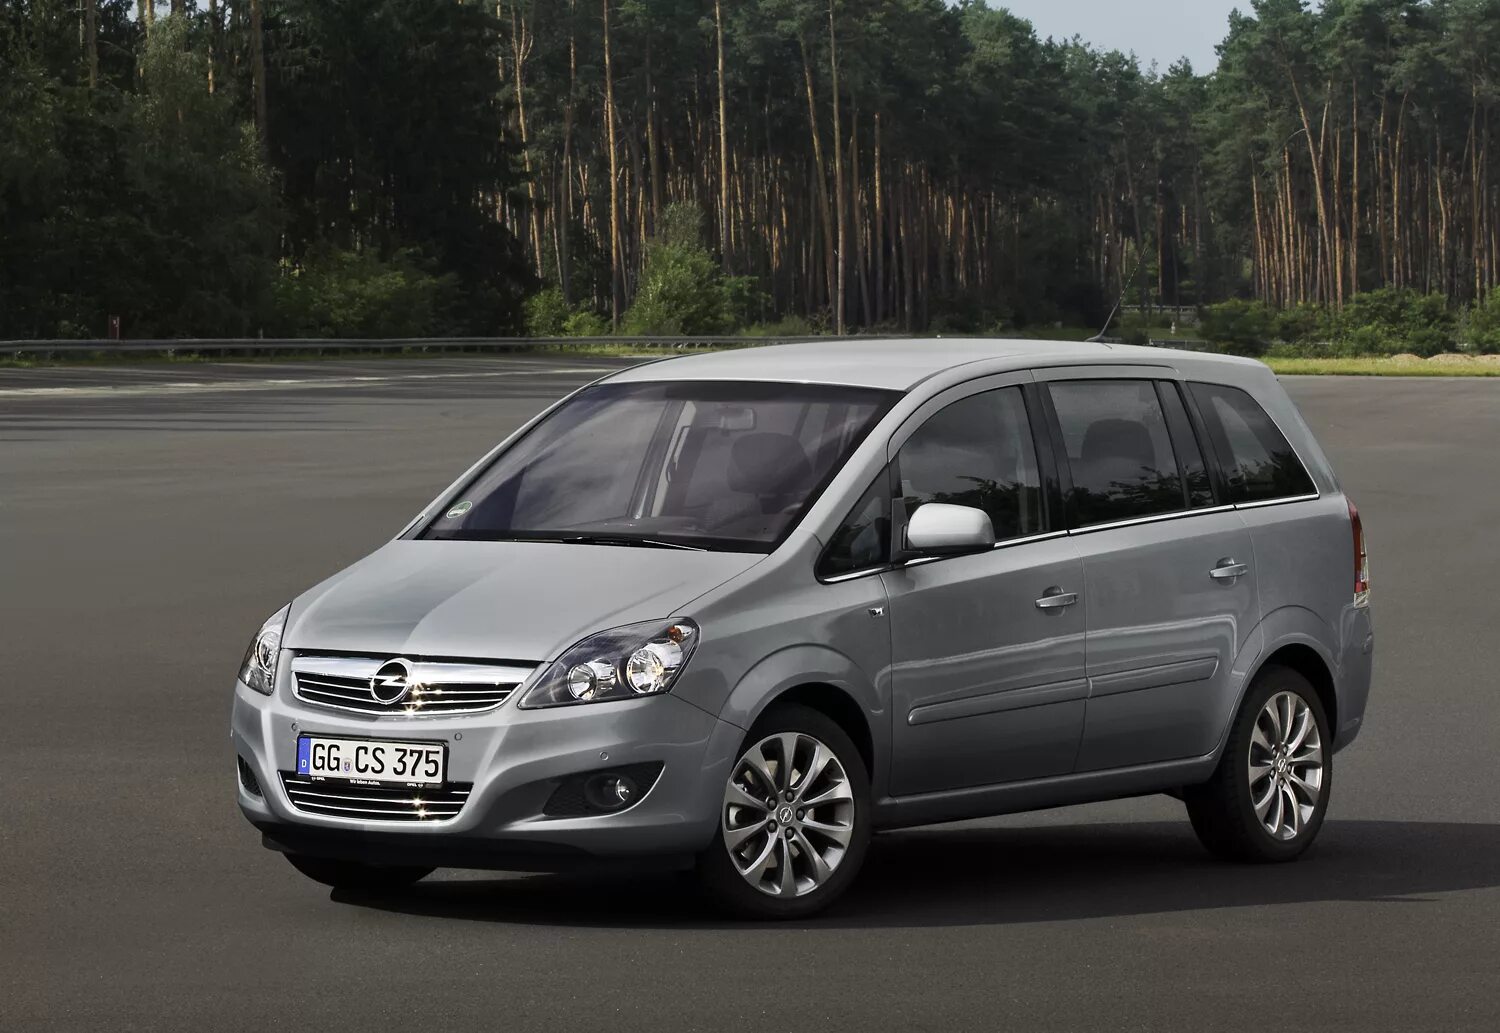 Opel Zafira b 2014. Opel Zafira b 2011. Опель Зафира б 2011. Зафира 2. Коды опель зафира б